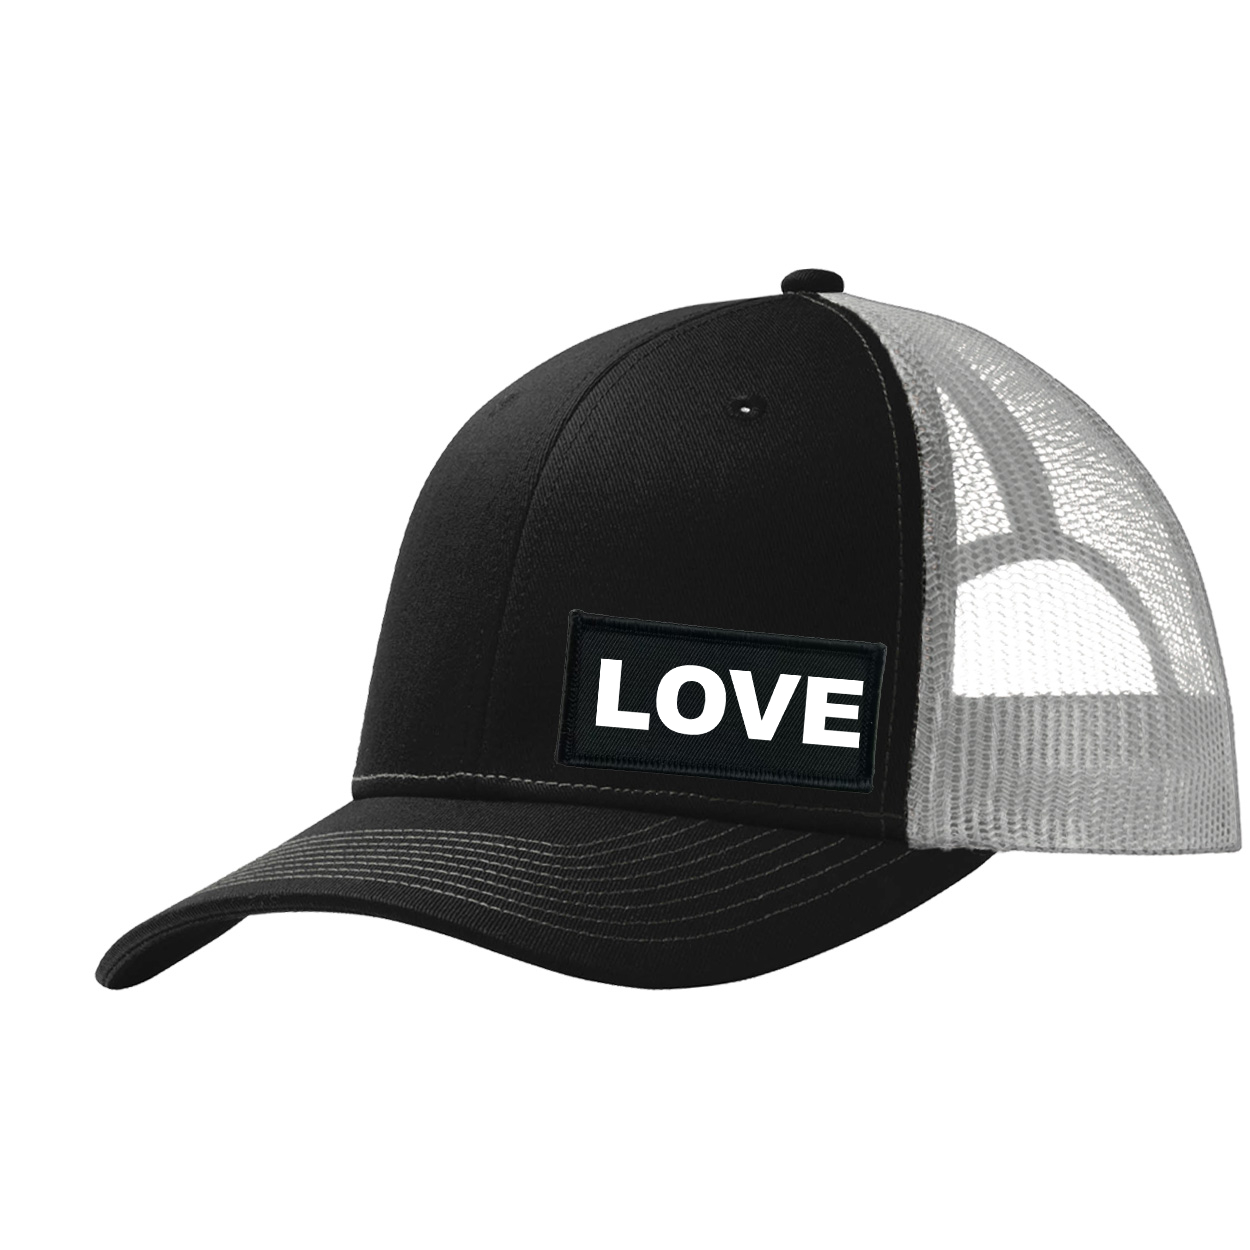 Love Brand Logo Night Out Woven Patch Snapback Trucker Hat Black/Gray